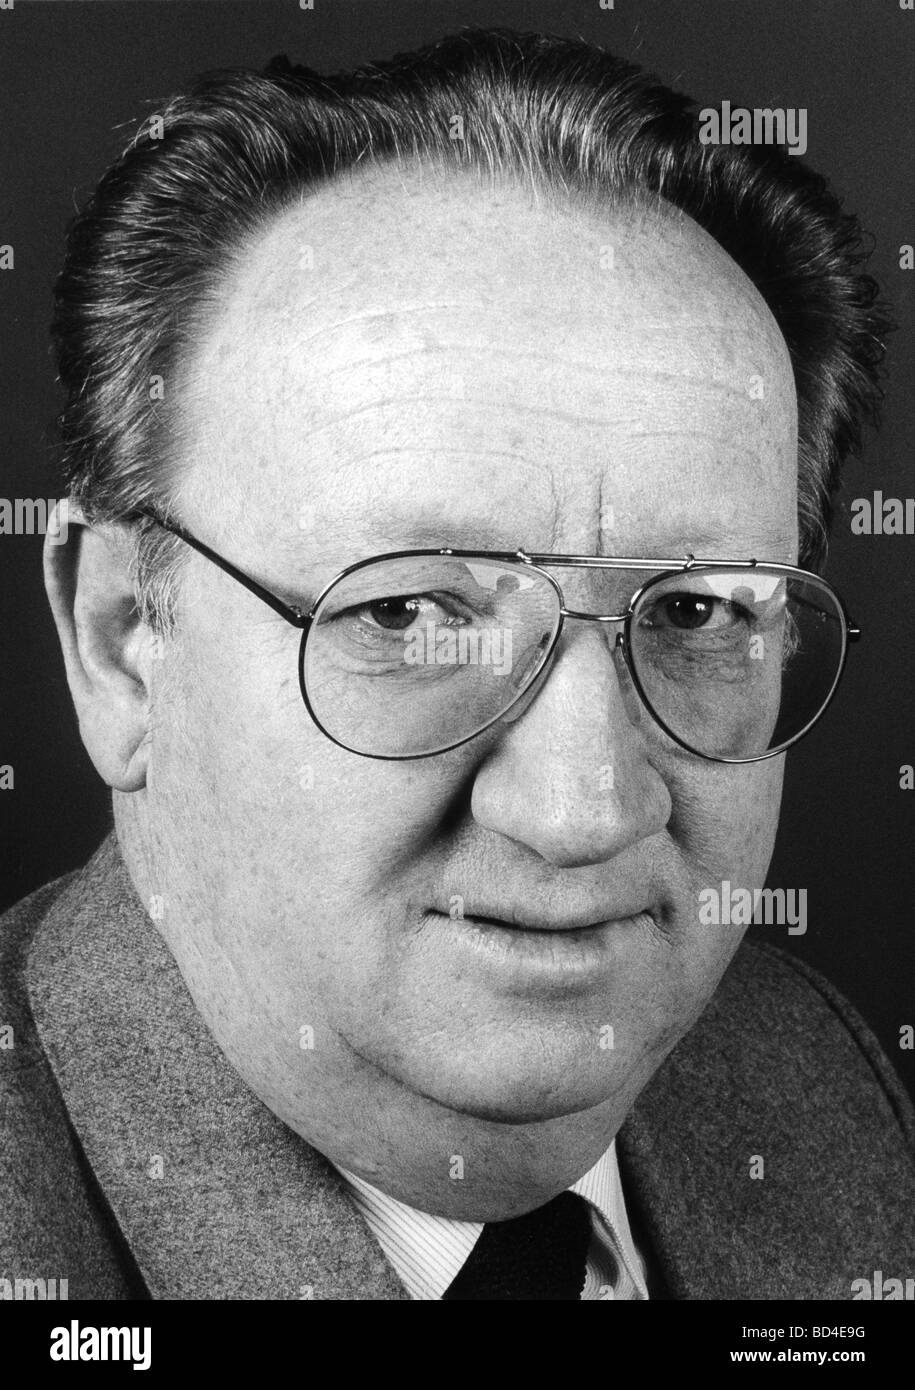 Klinkenborg, Jan, 26.9.1936 - 28.7.1988, politico tedesco (DOCUP), membro del Parlamento europeo 17.7.1979 - 28.7.1988, Portrait, circa 1980, Foto Stock